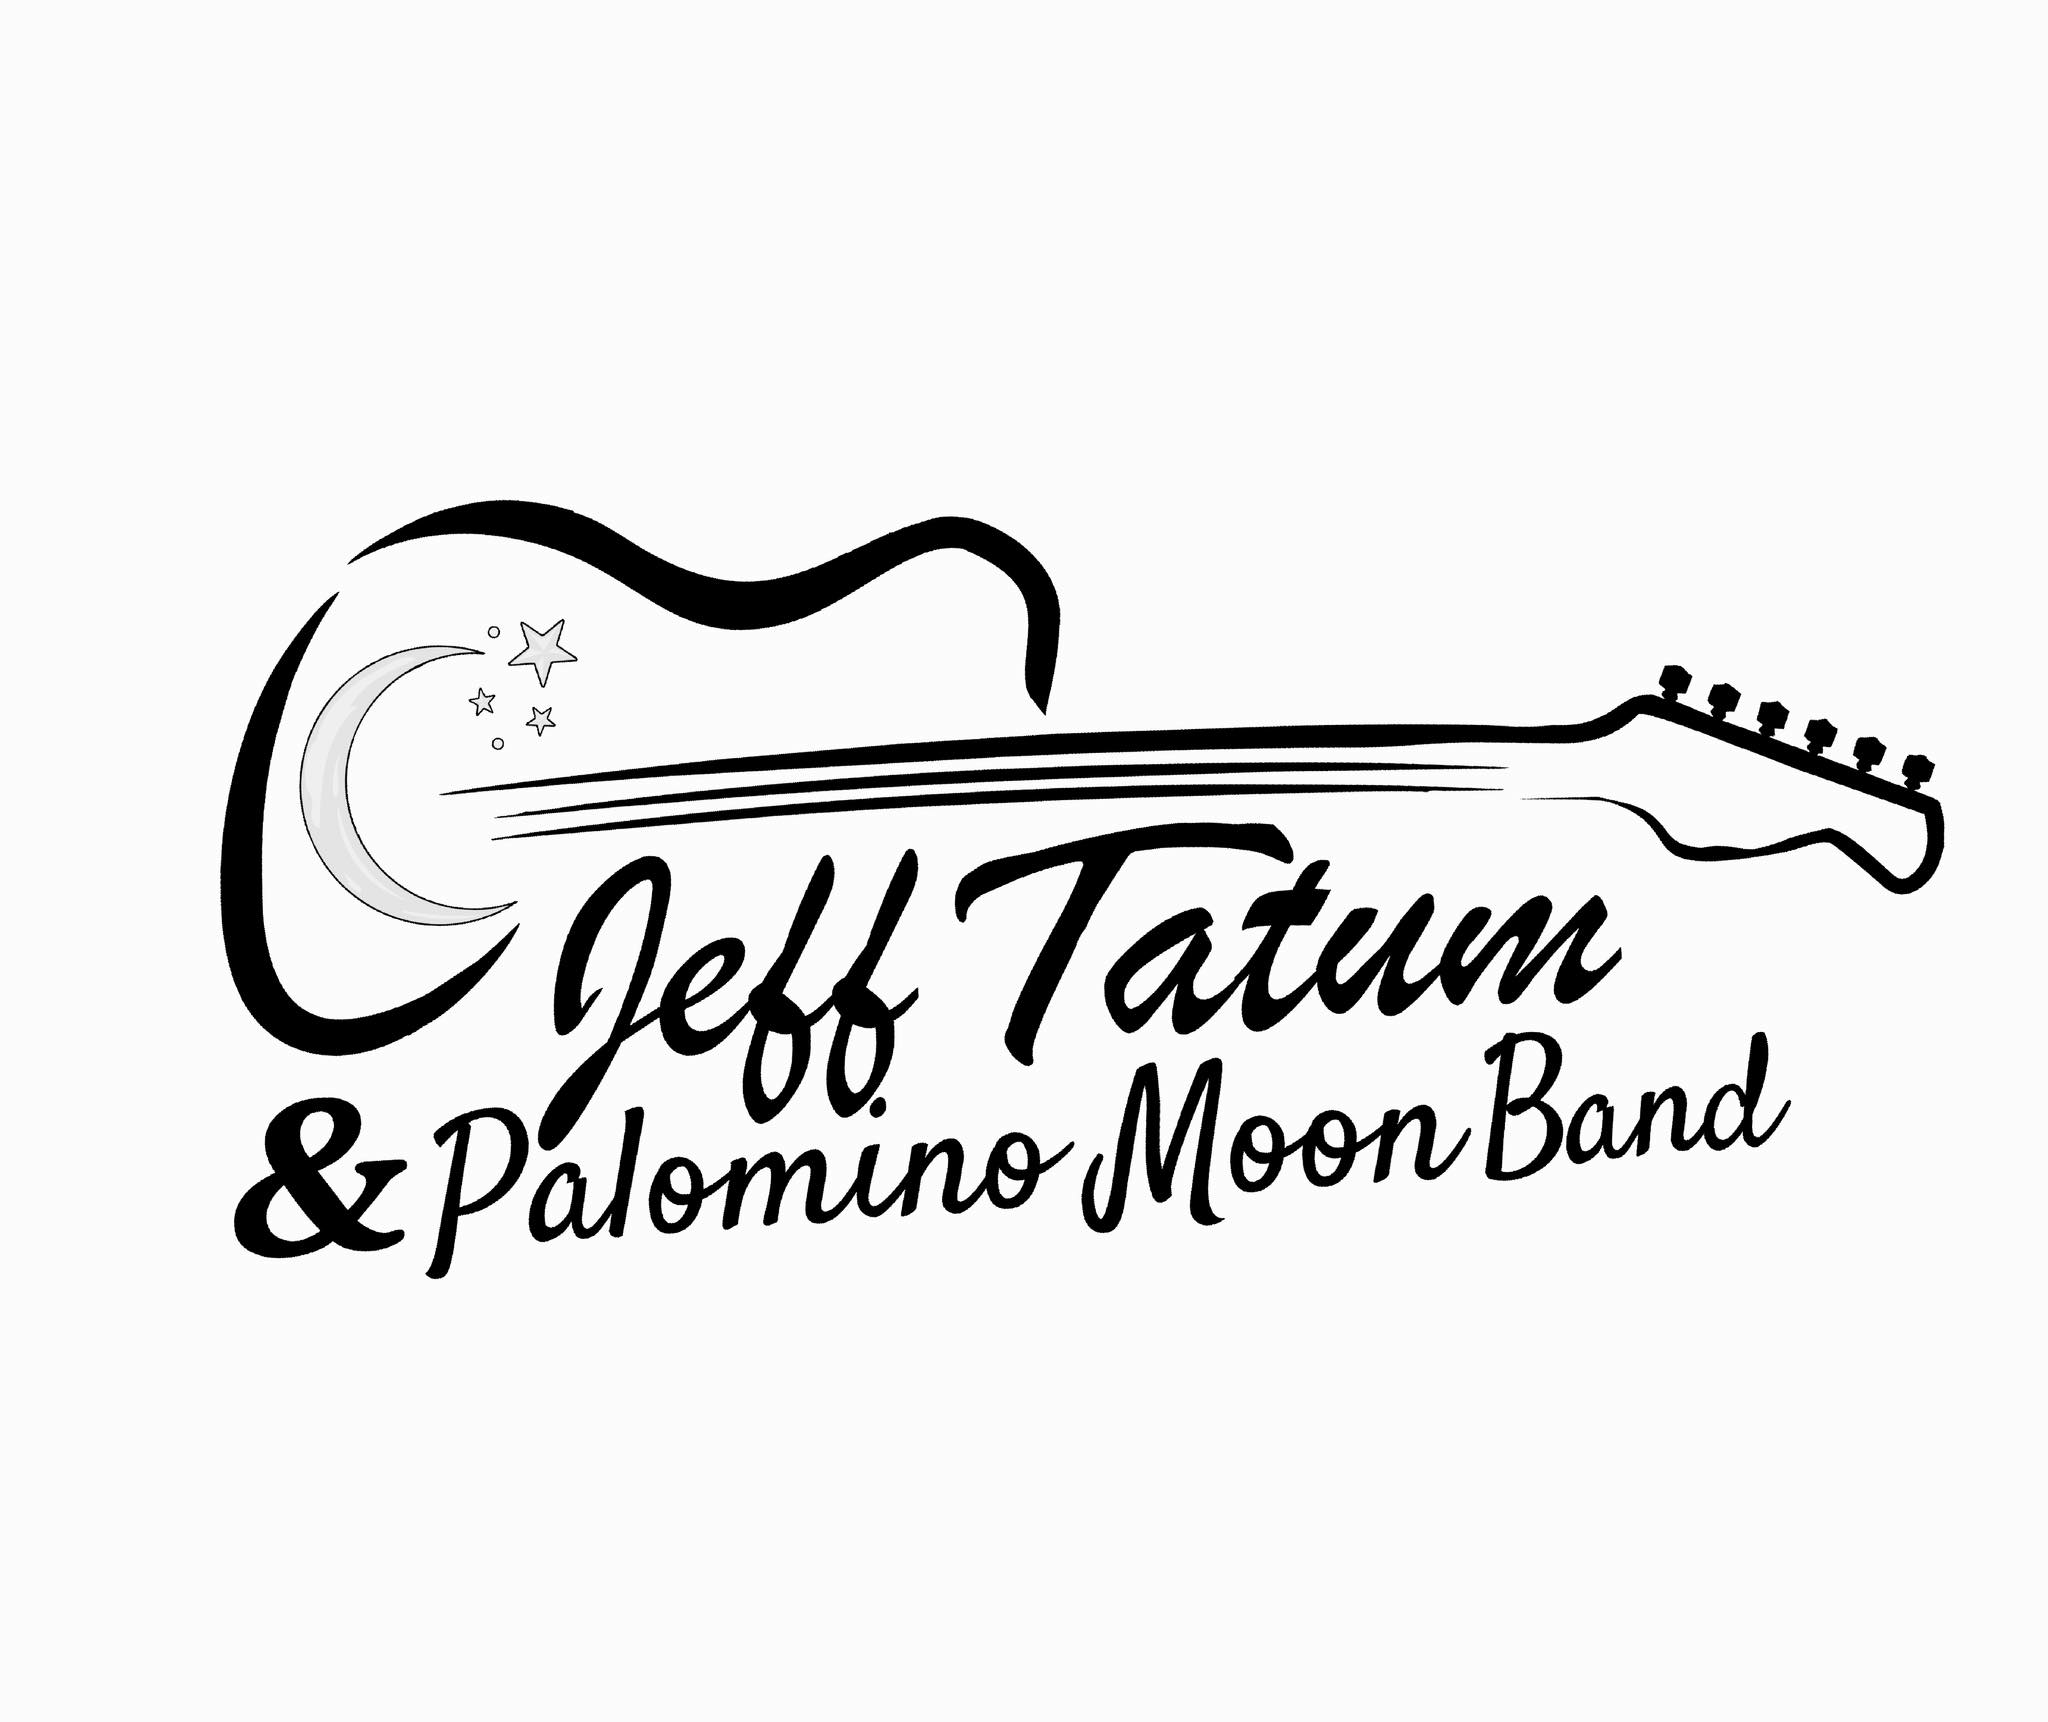 Jeff Tatum & Palomino Moon